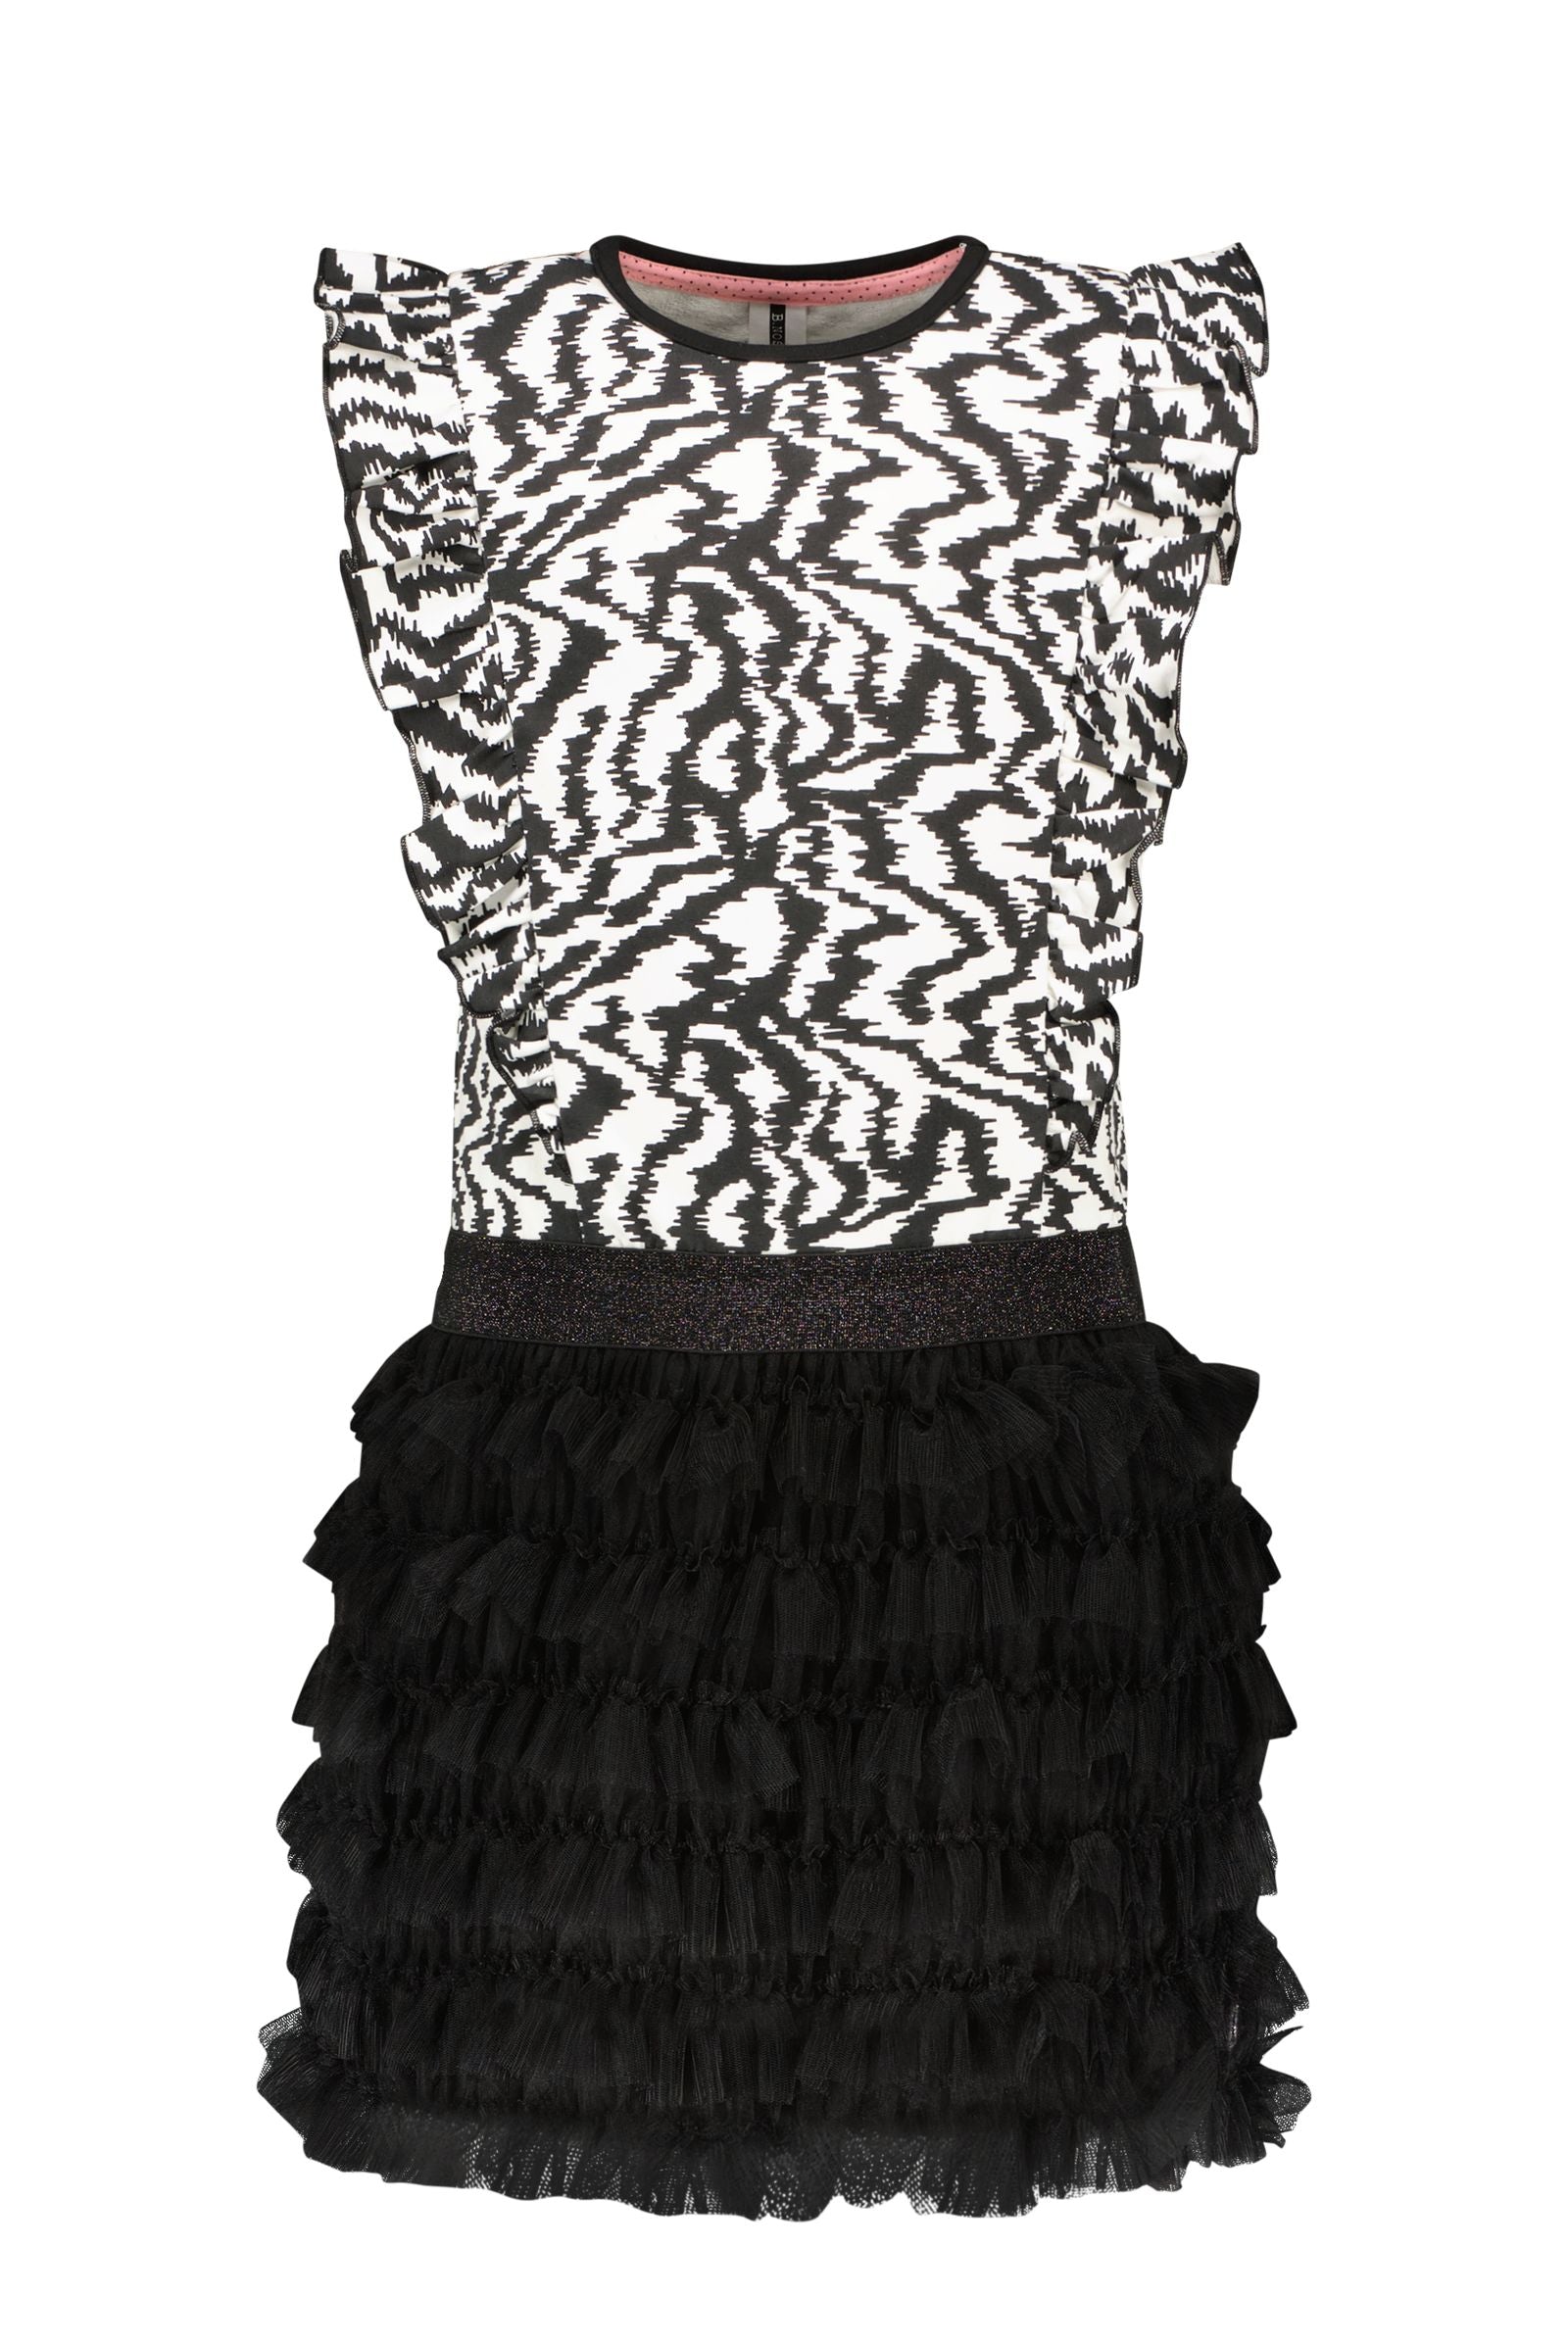 Girls dress with sweat banana zebra aop top and mesh skirt